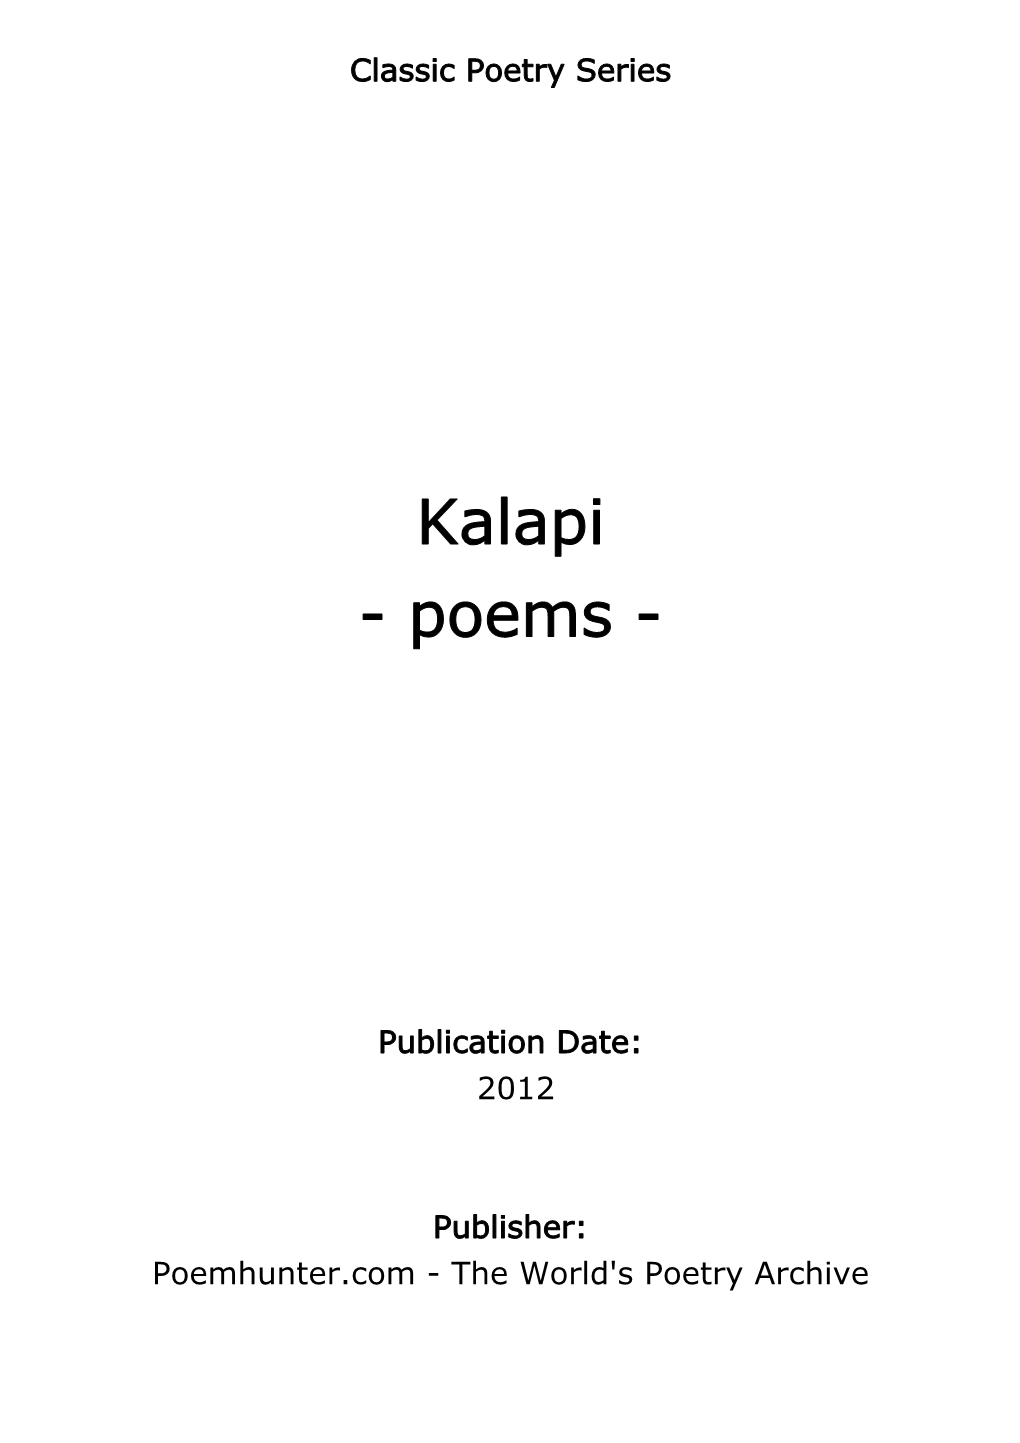 Kalapi - Poems